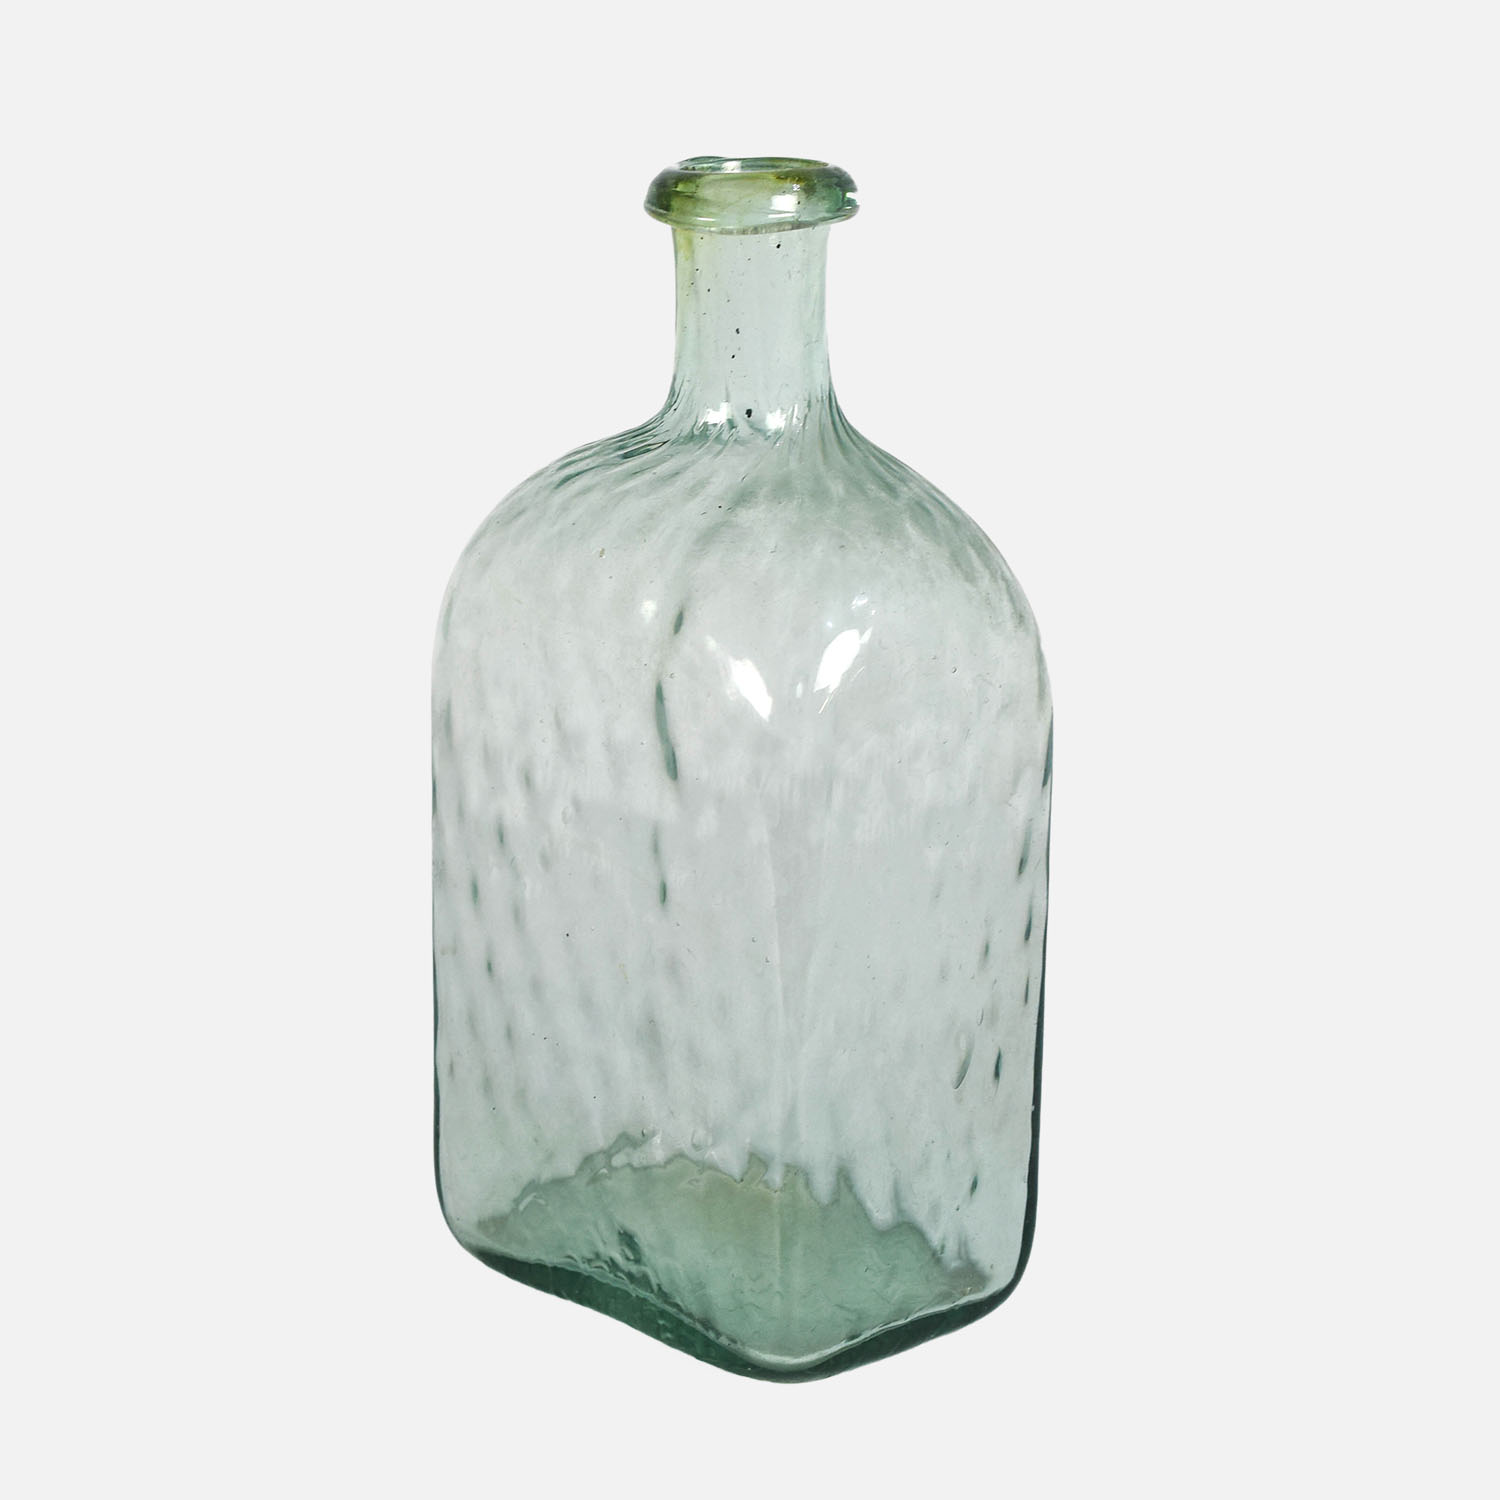 Early American Blown Glass Bottle Diamond Quilt